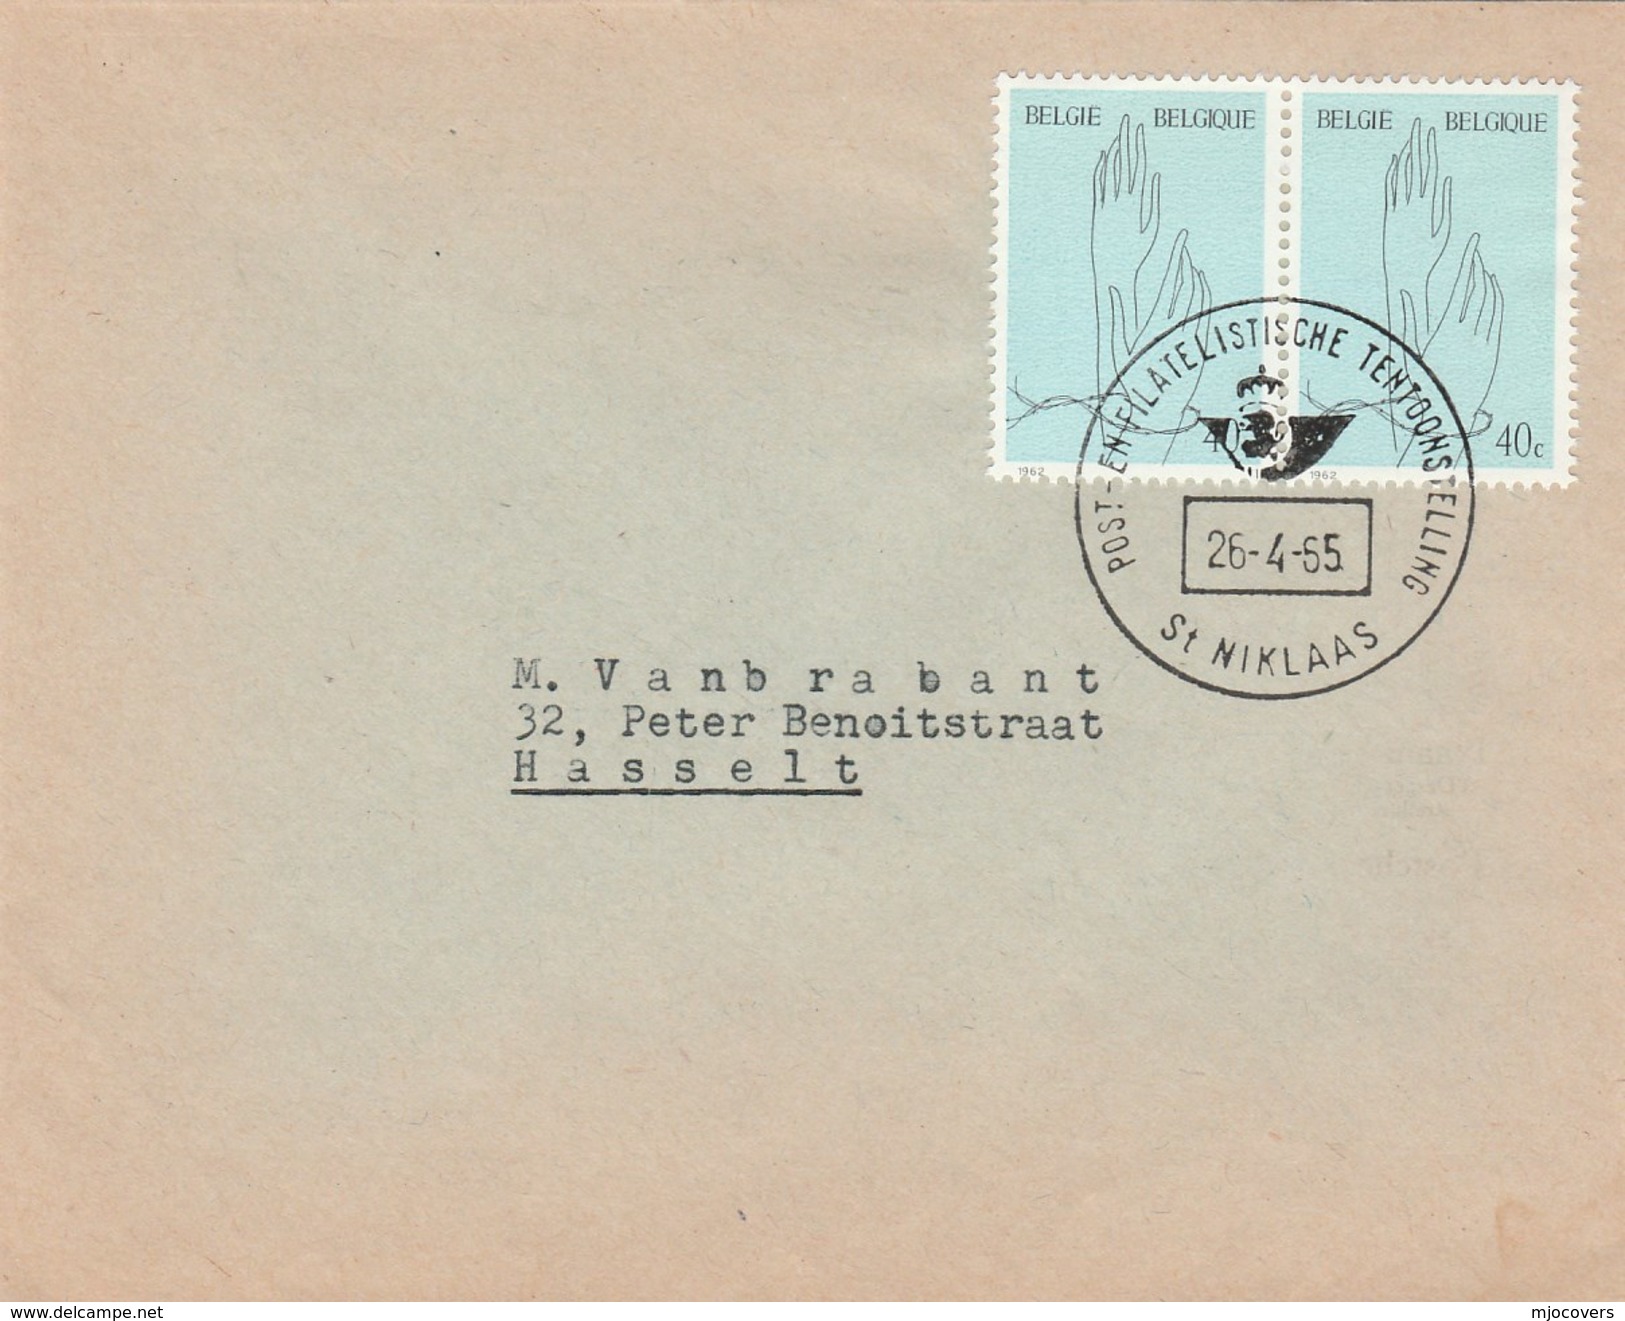 1965 BELGIUM COVER EVENT Pmk CHATELET PHILATELIC EXPOSITION, Stamps Exhibition - Philatelic Exhibitions